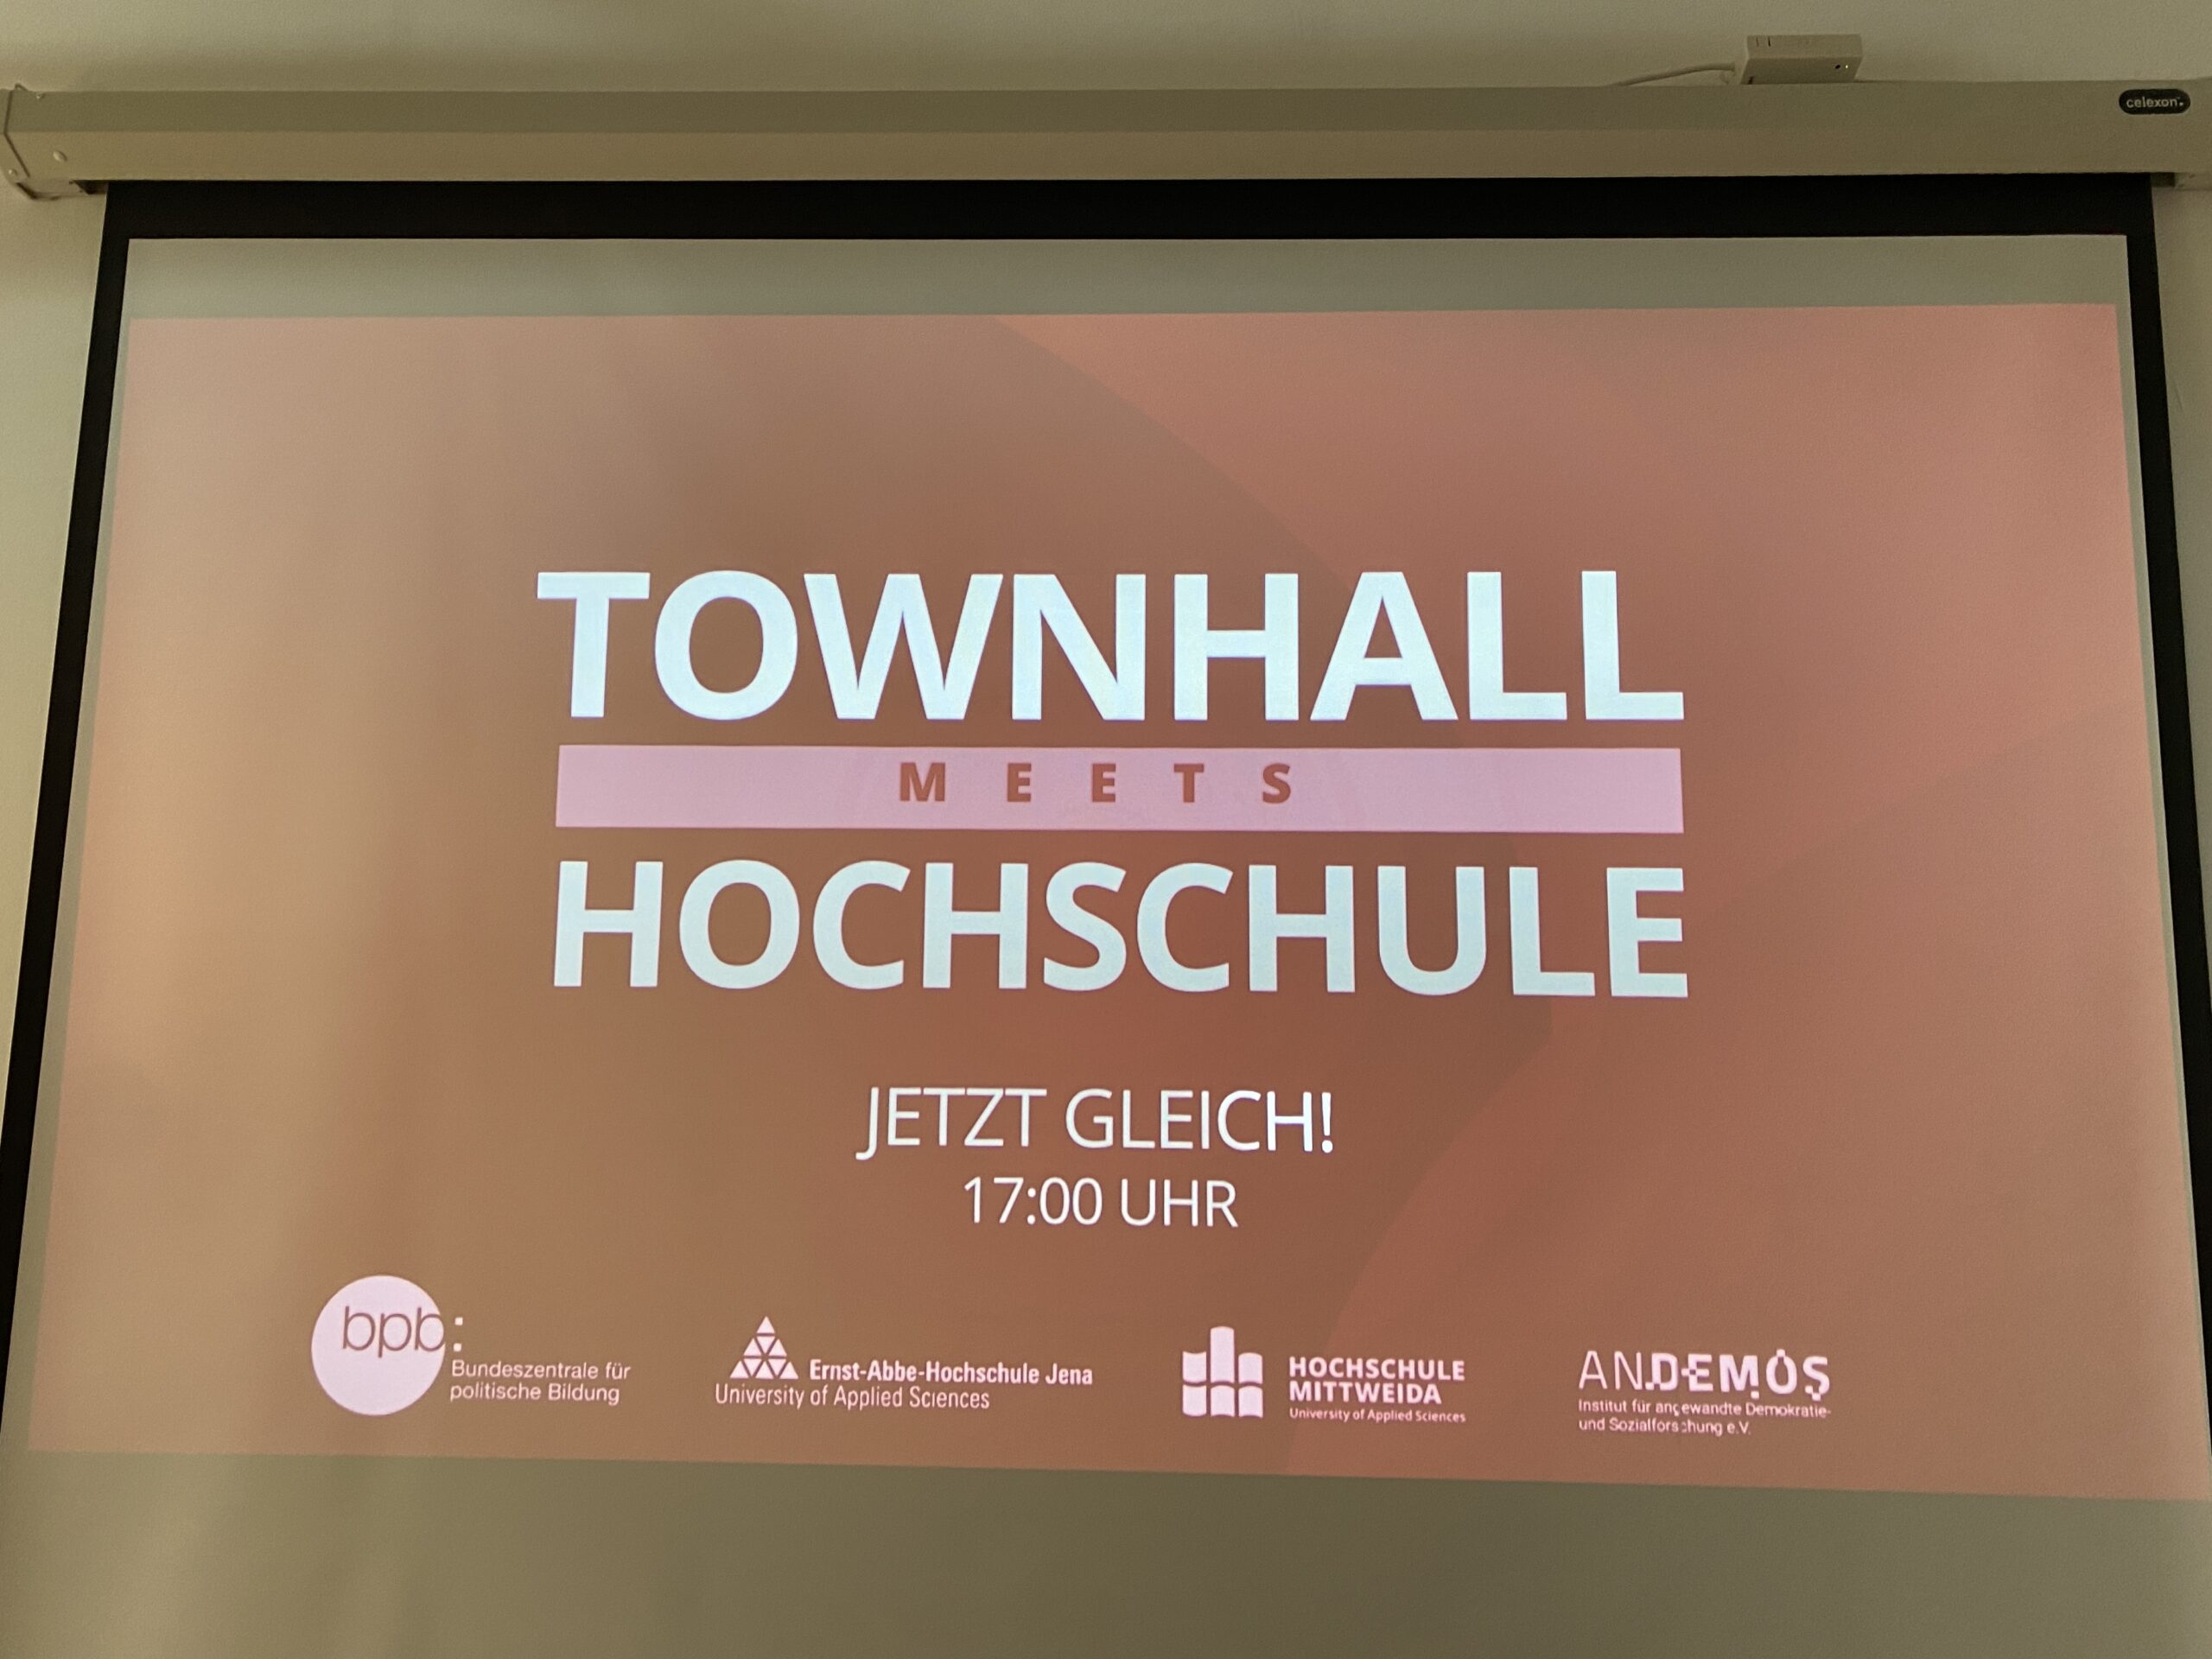 Townhall meets Hochschule im Weltclub Dresden